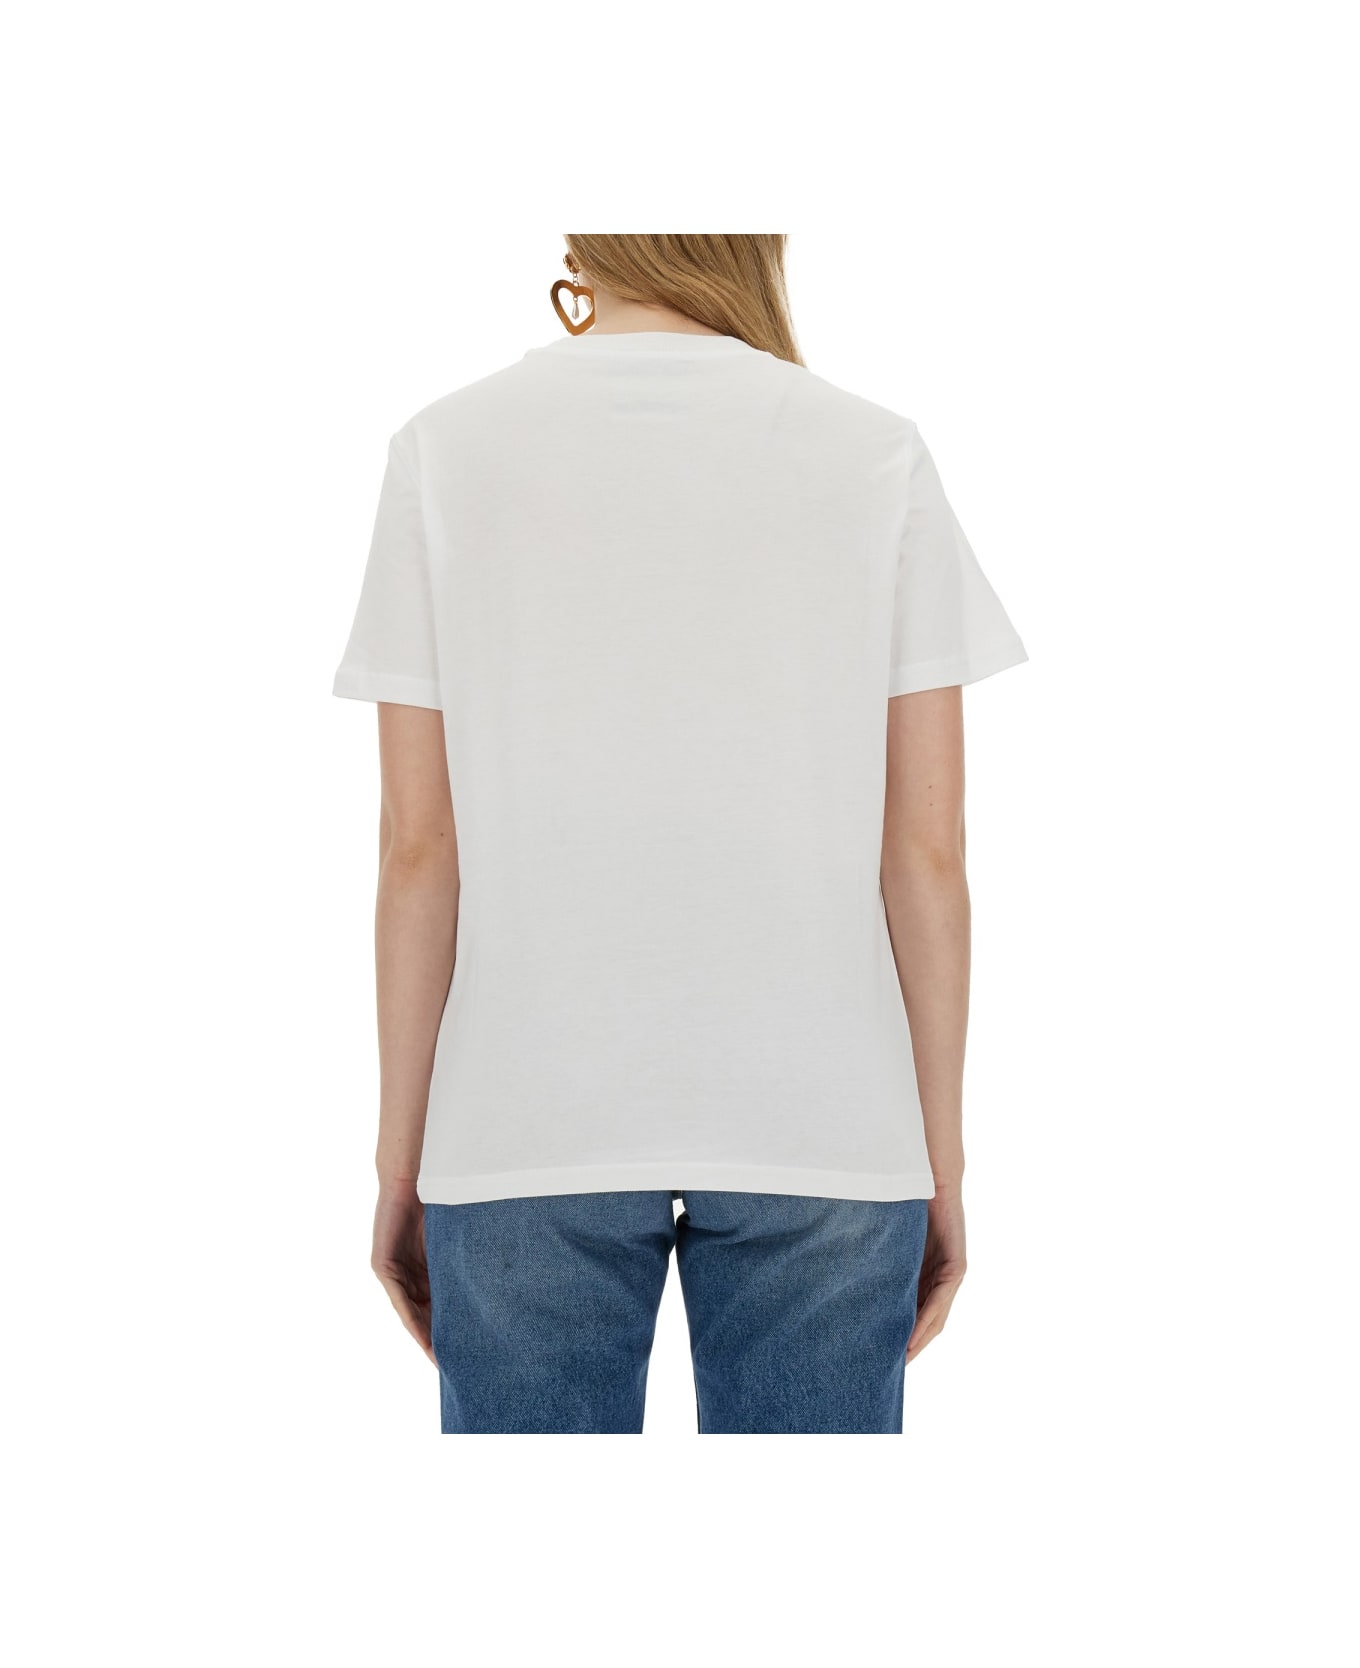 Moschino Teddy Bear T-shirt - WHITE